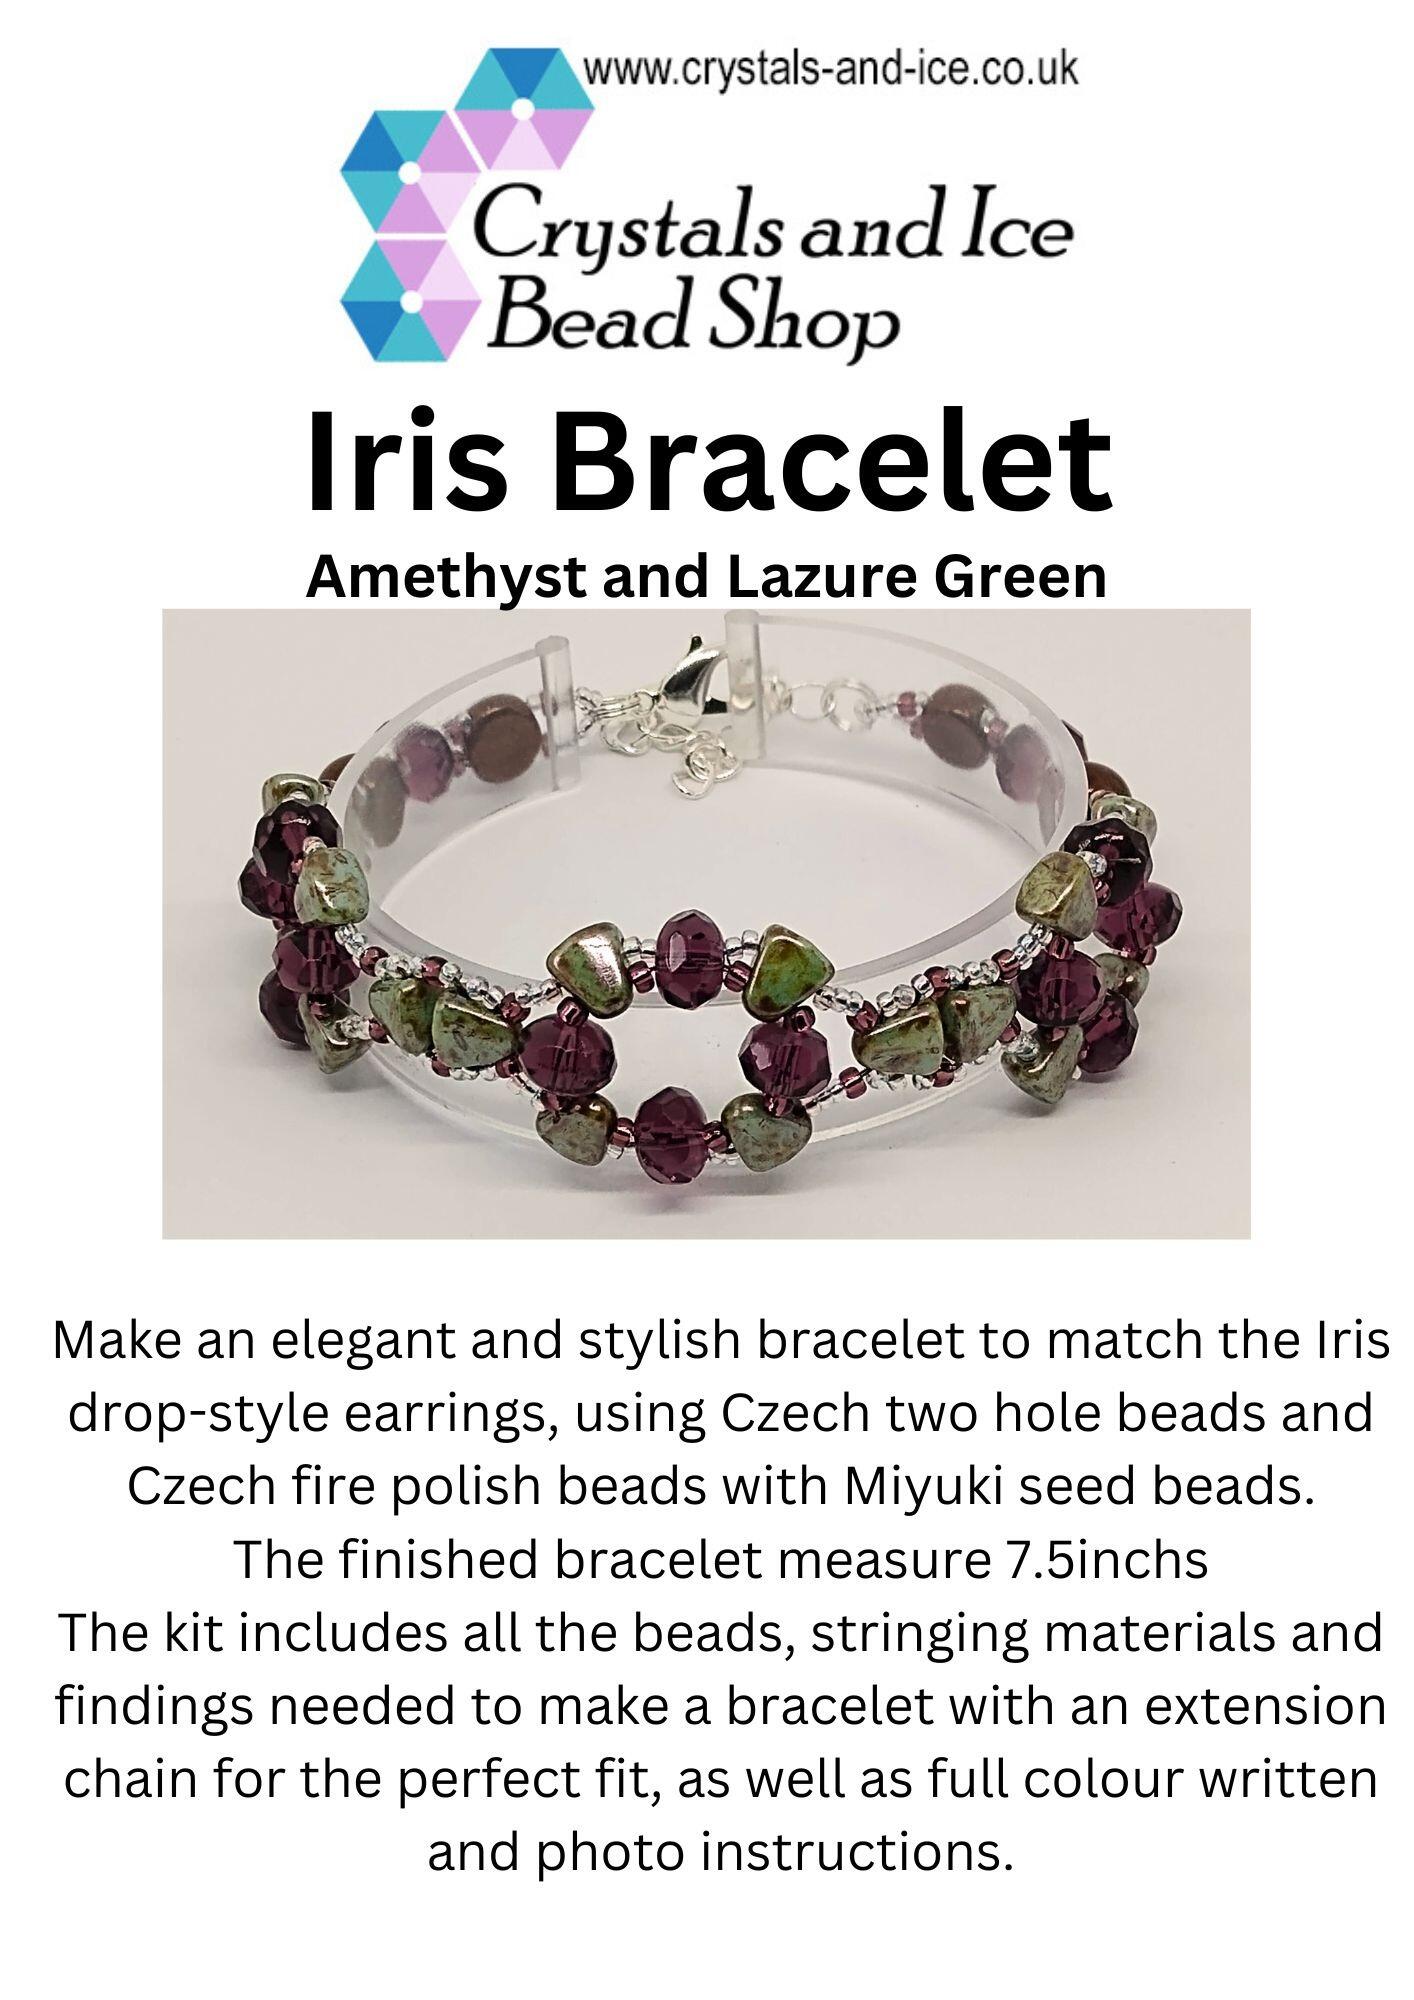 Iris Bracelet Kit - Amethyst and Lazure Green